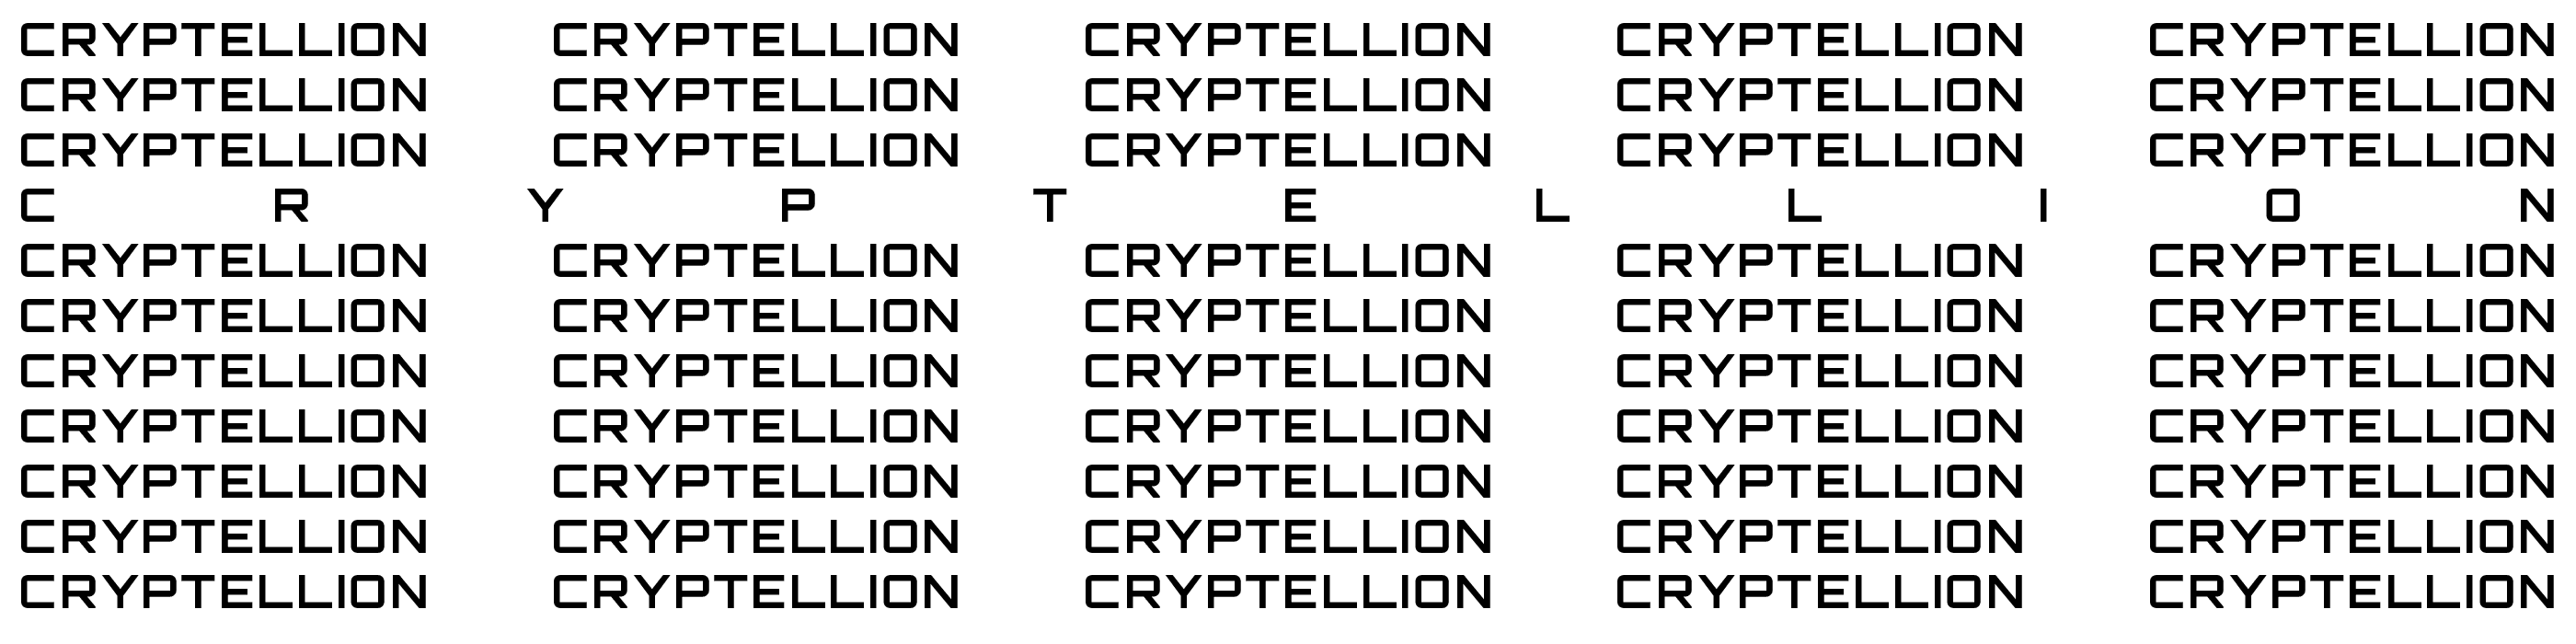 Cryptellion バナー